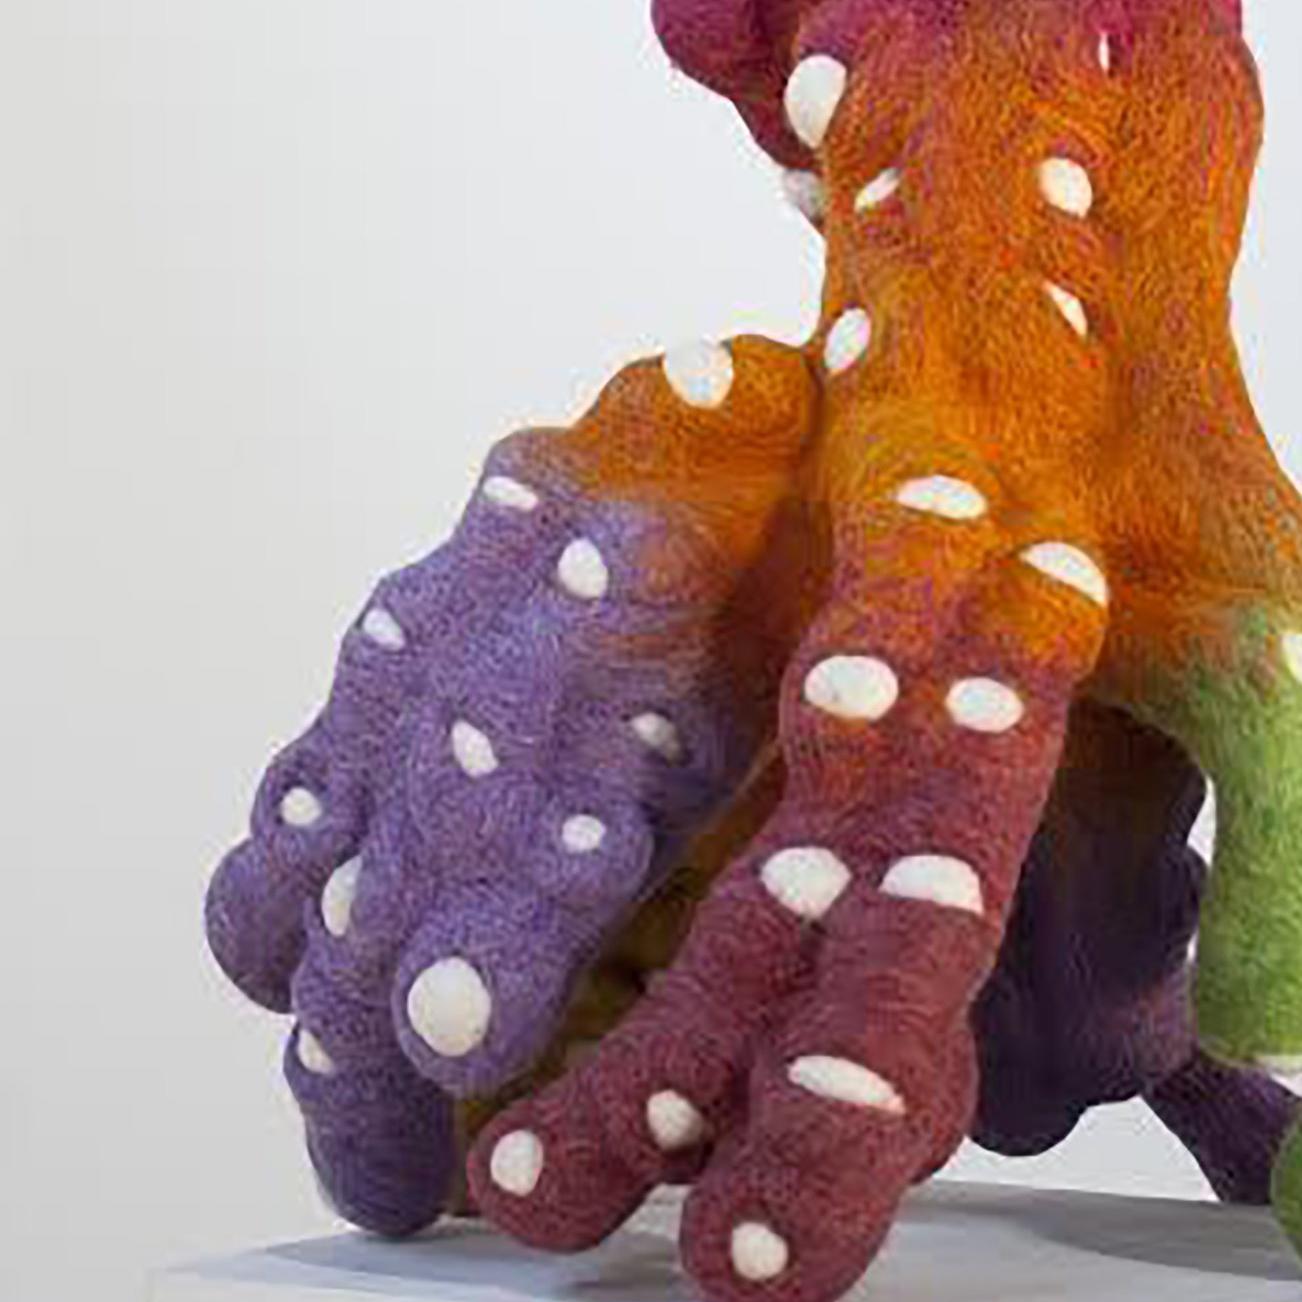 Creamcilces and Fruit Loops - Surrealist Sculpture by Mark Burt